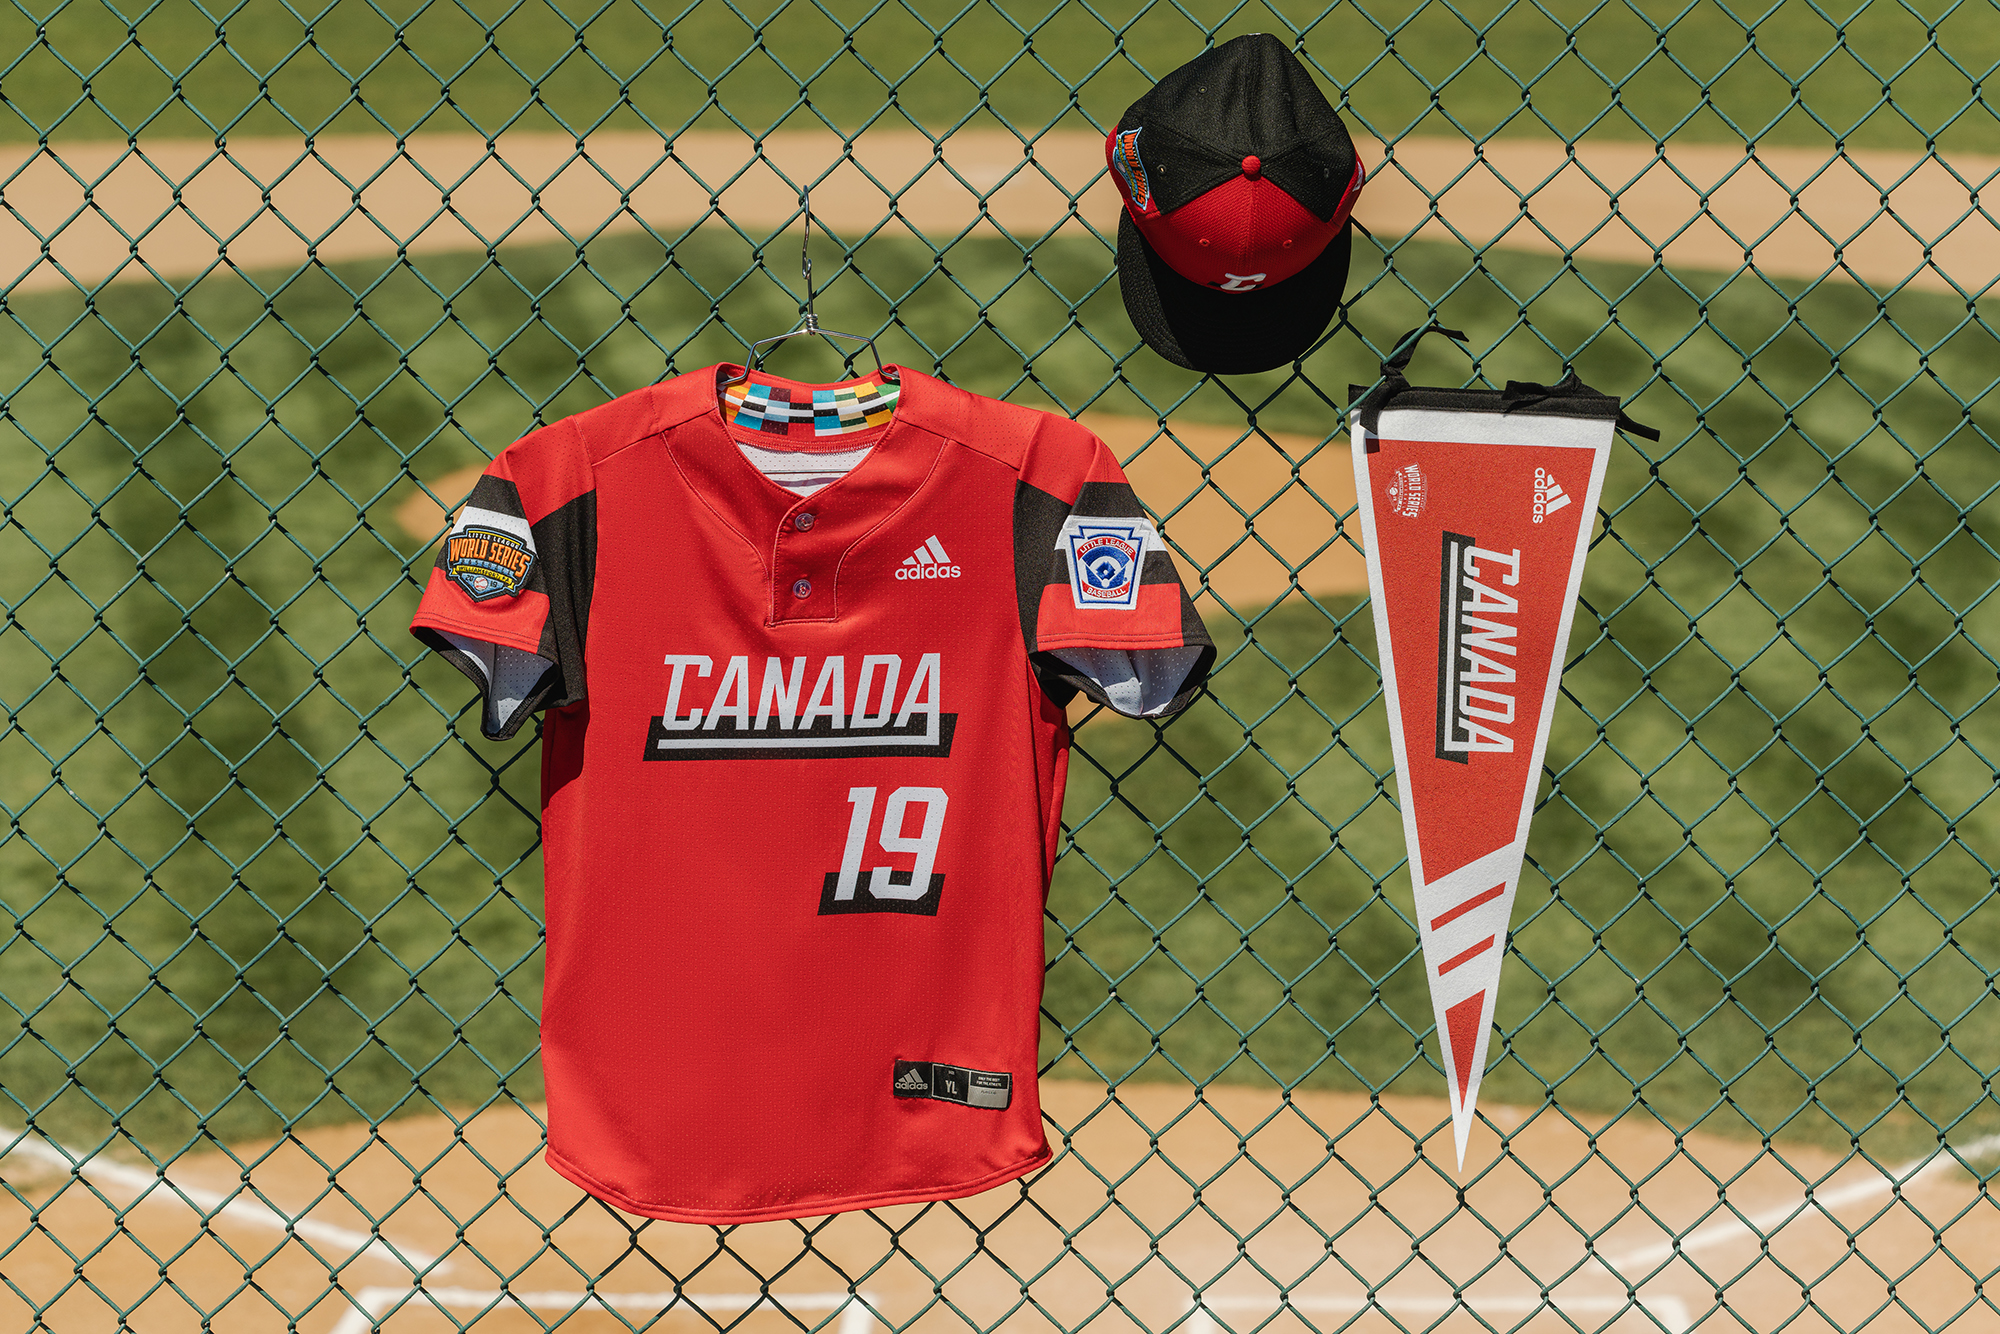 Little League® World Series Uniforms and Team Colors Unveiled for 2021 -  Little League